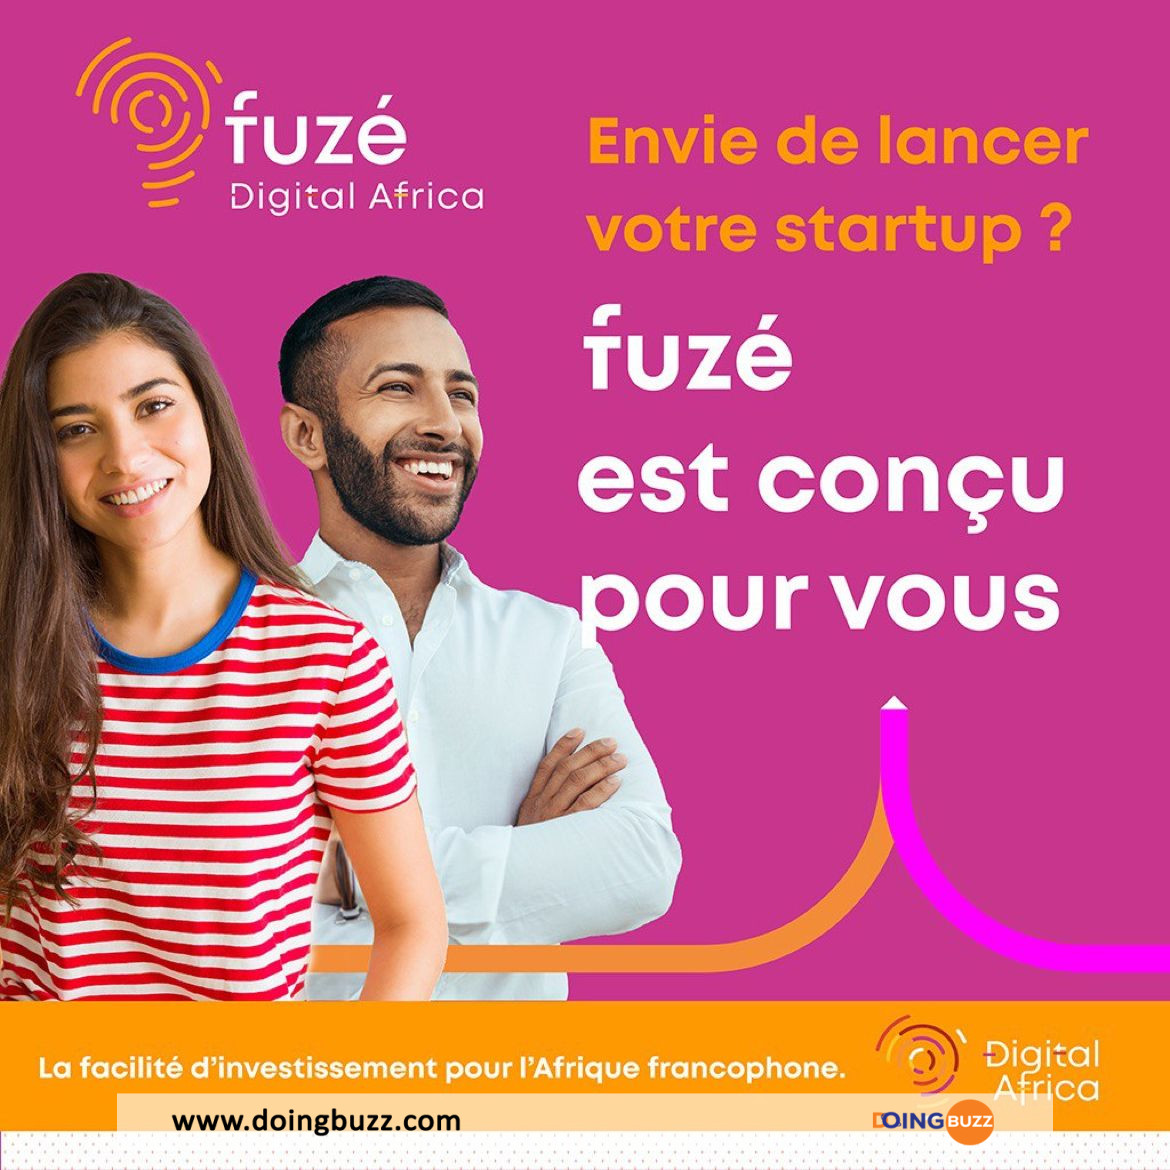 Fuzé : Digital Africa Offre Des Investissements Aux Startups Africaines Francophones